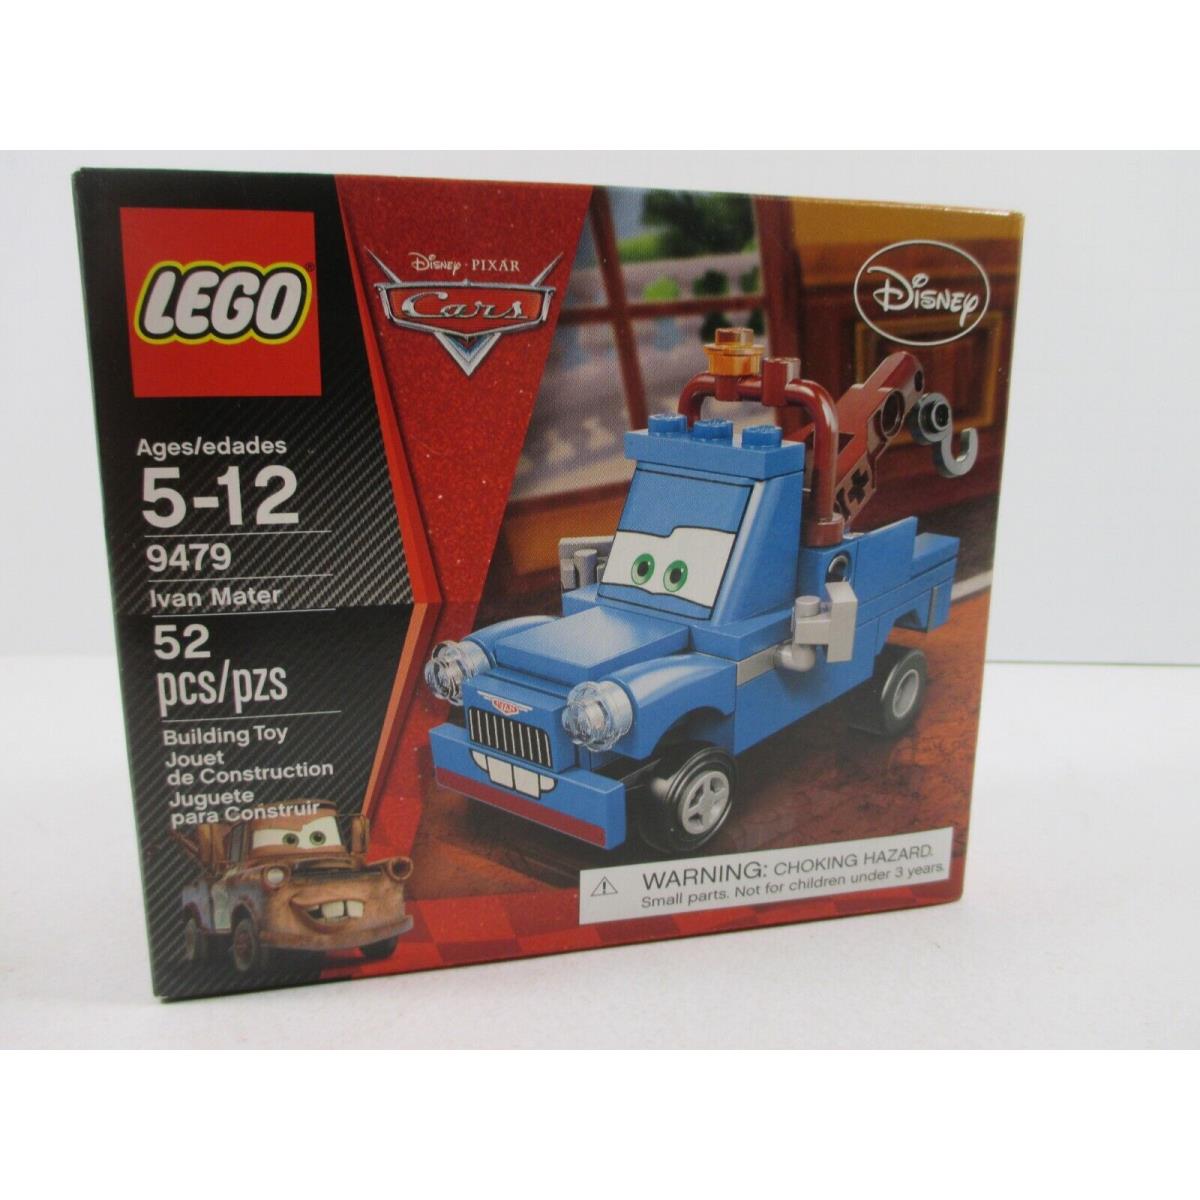 Lego Disney Pixar Cars Ivan Mater 9479 Retired 2012 Toy Set